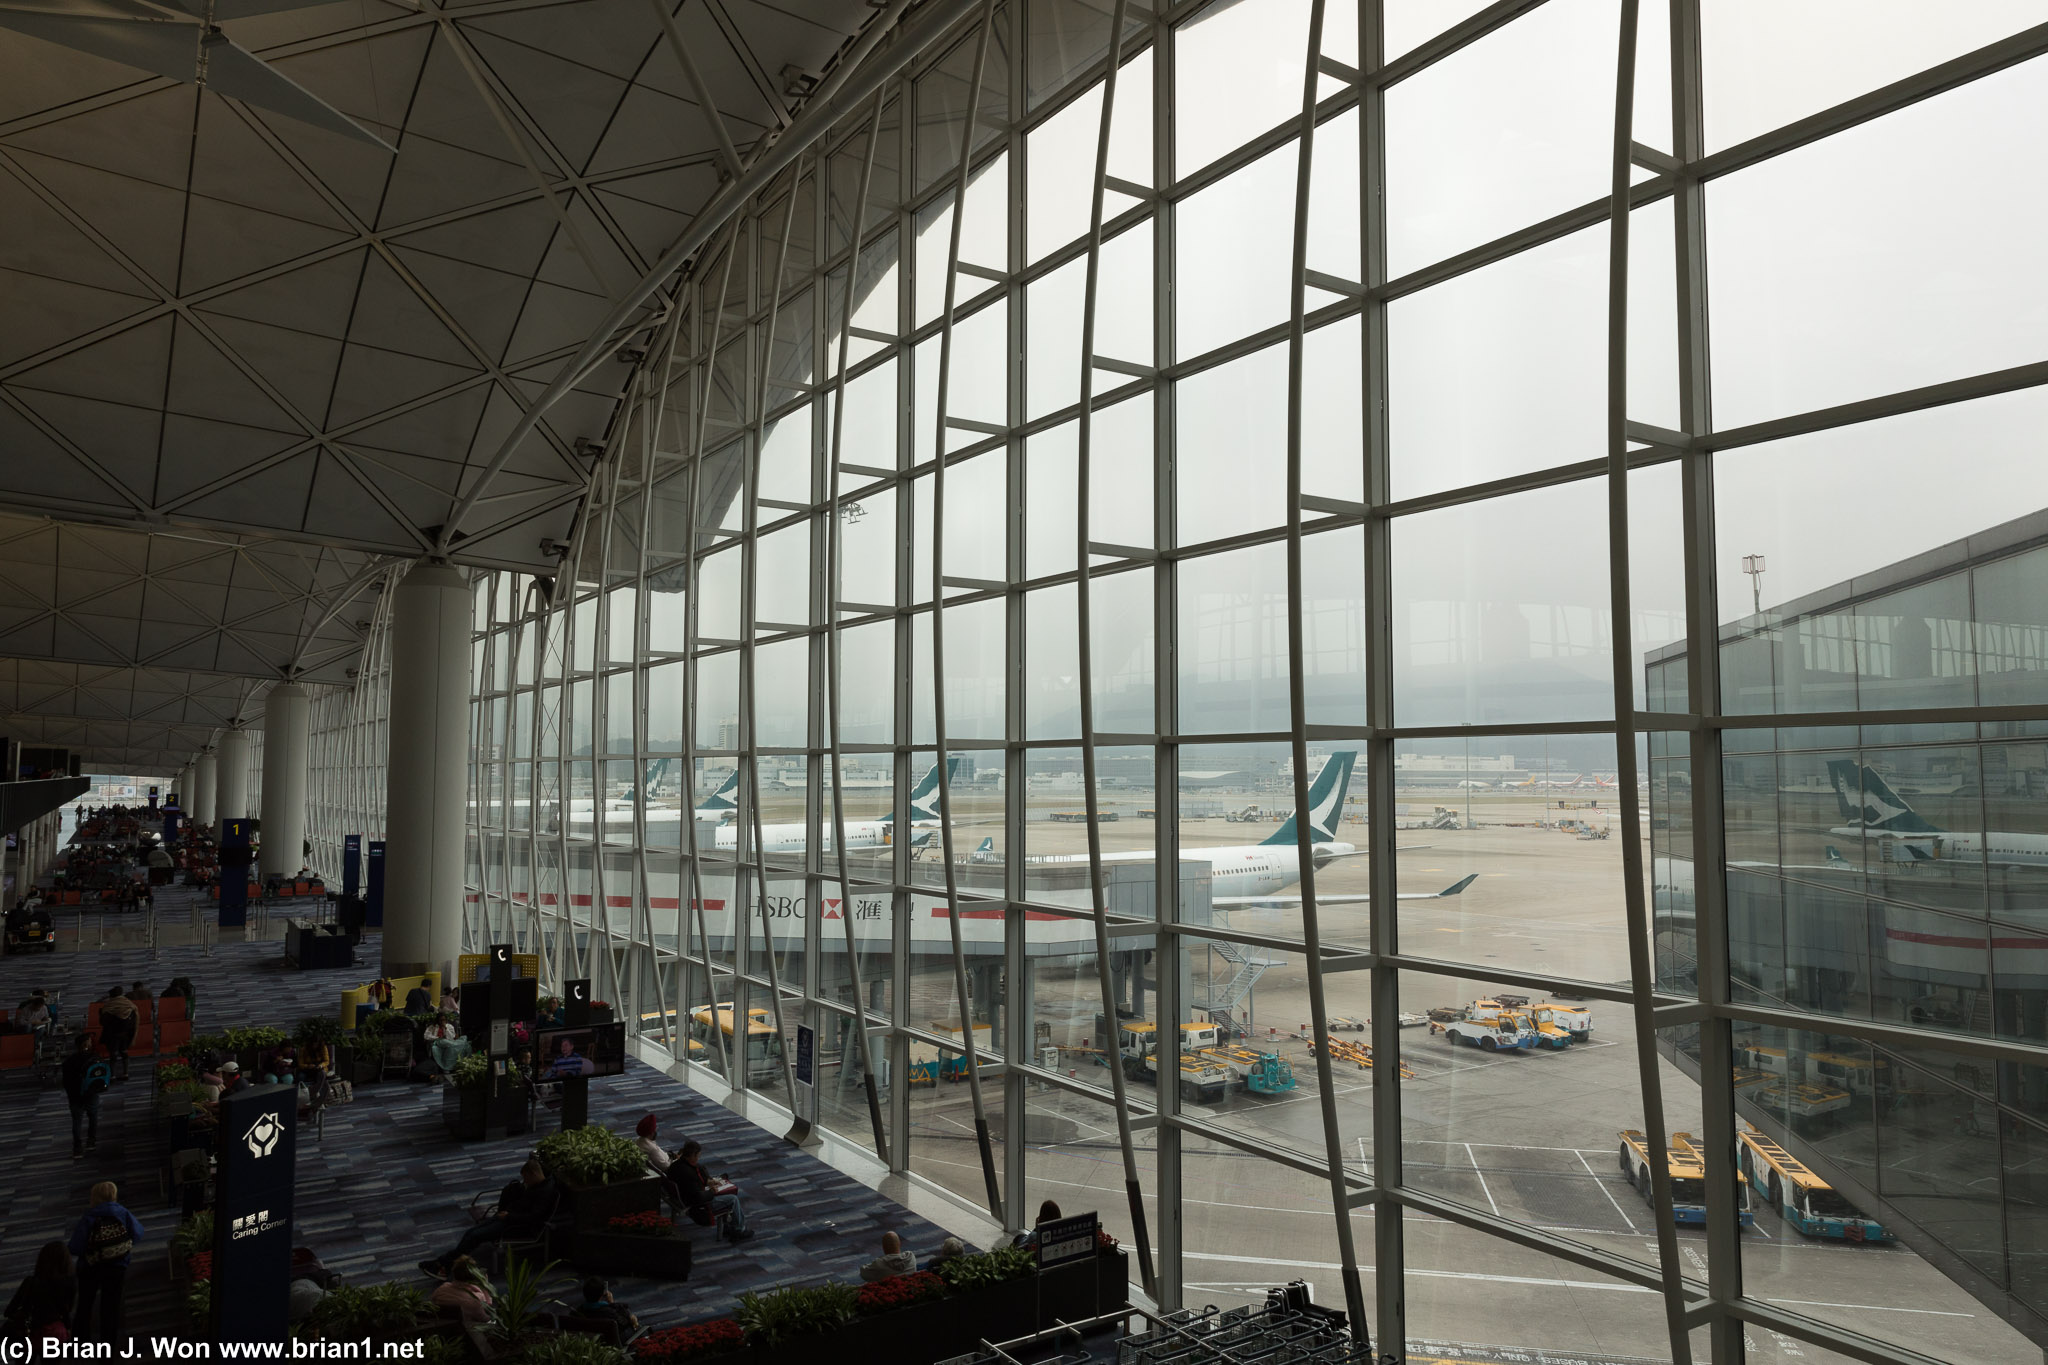 Cathay Pacific A330's lined up at Terminal 1 of Hong Kong International Airport.